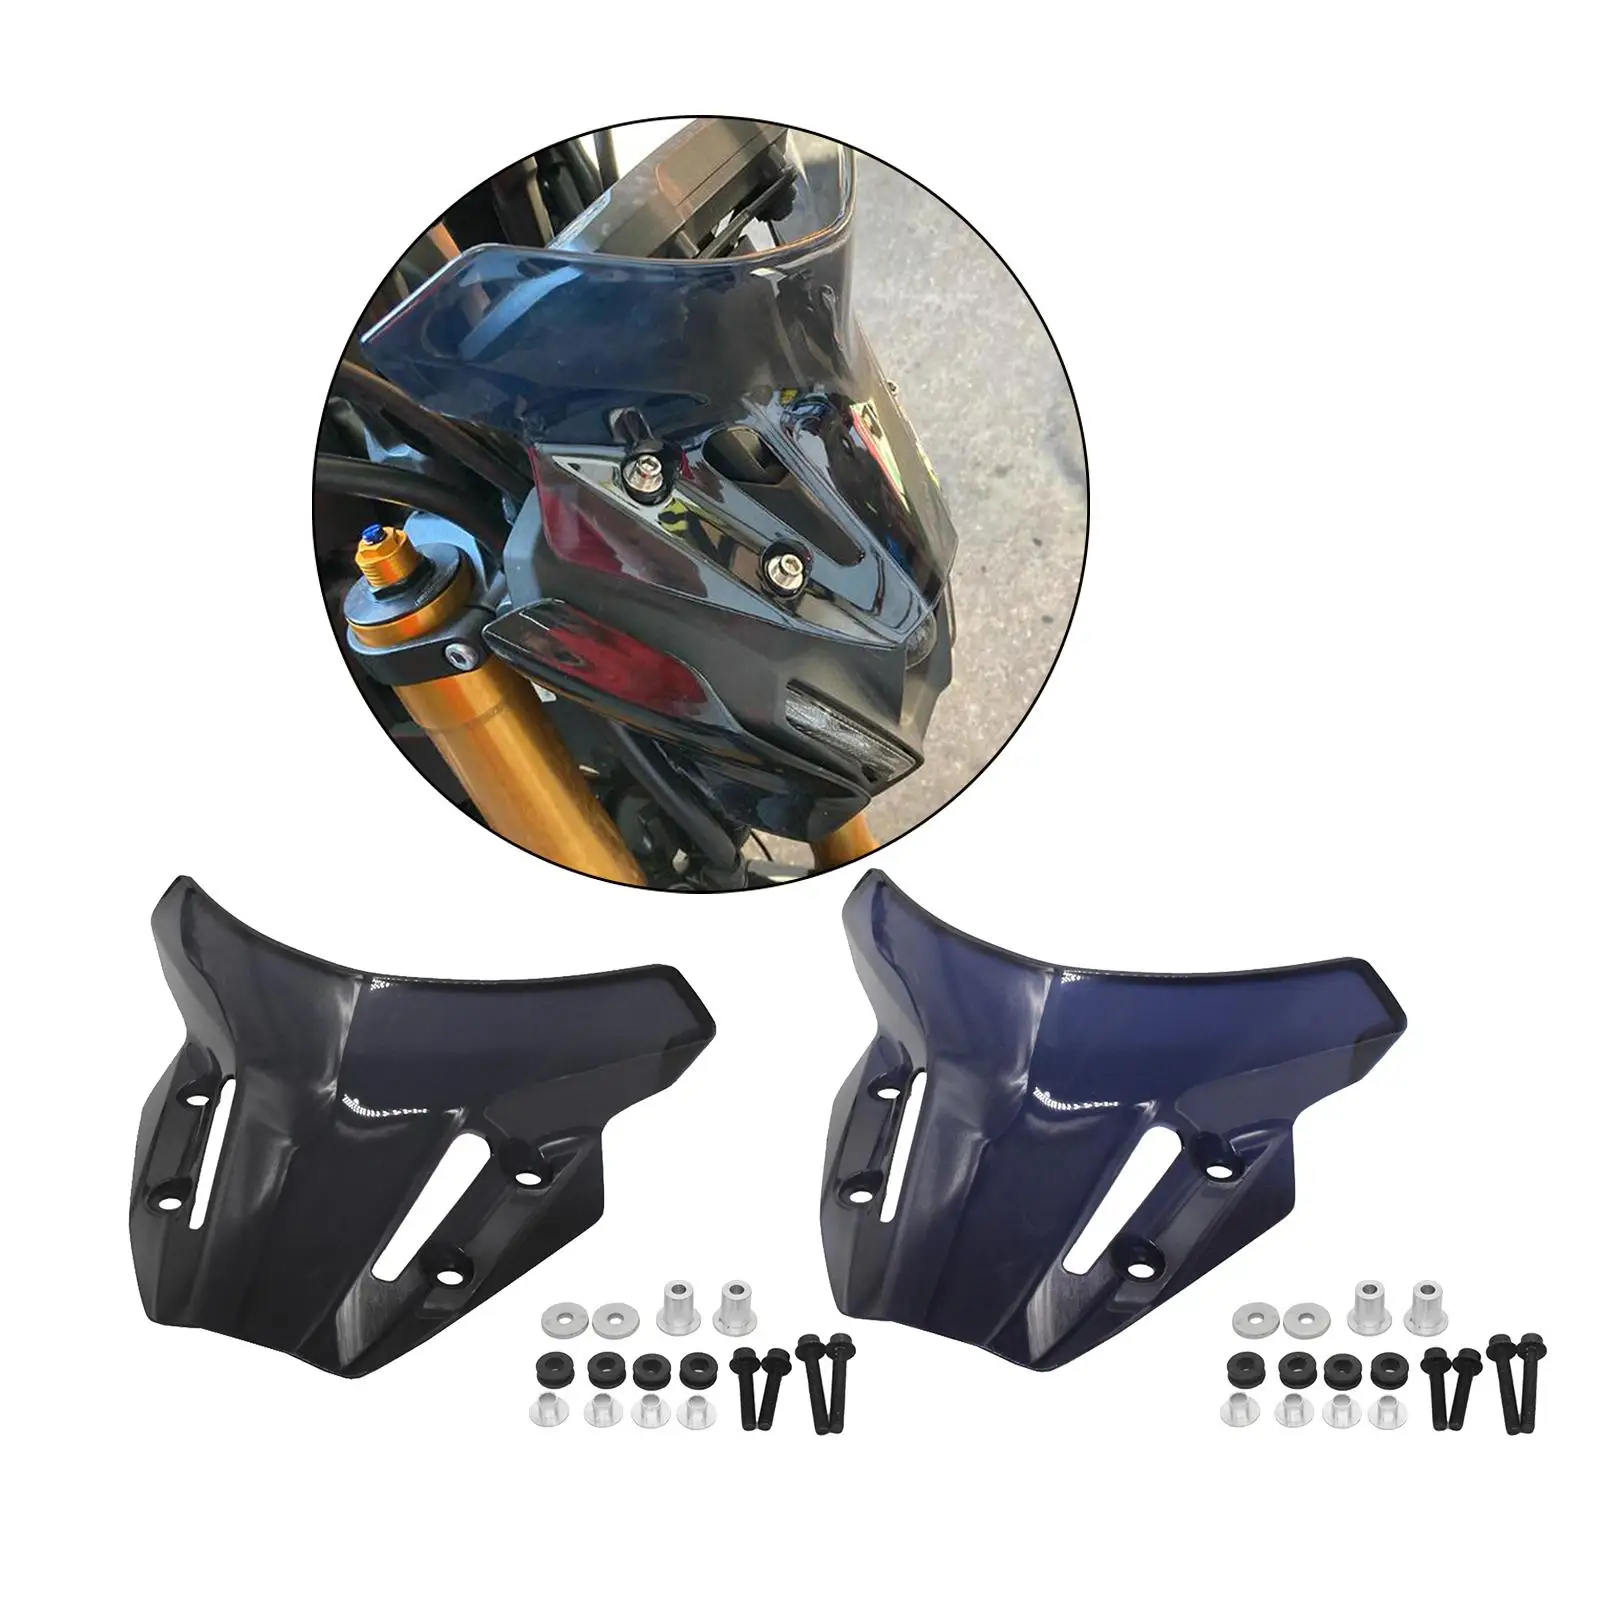  Windshield,  Accessories, Motorbike Wind Deflector, Front Fairing Windscreen for  FZ09 Professional